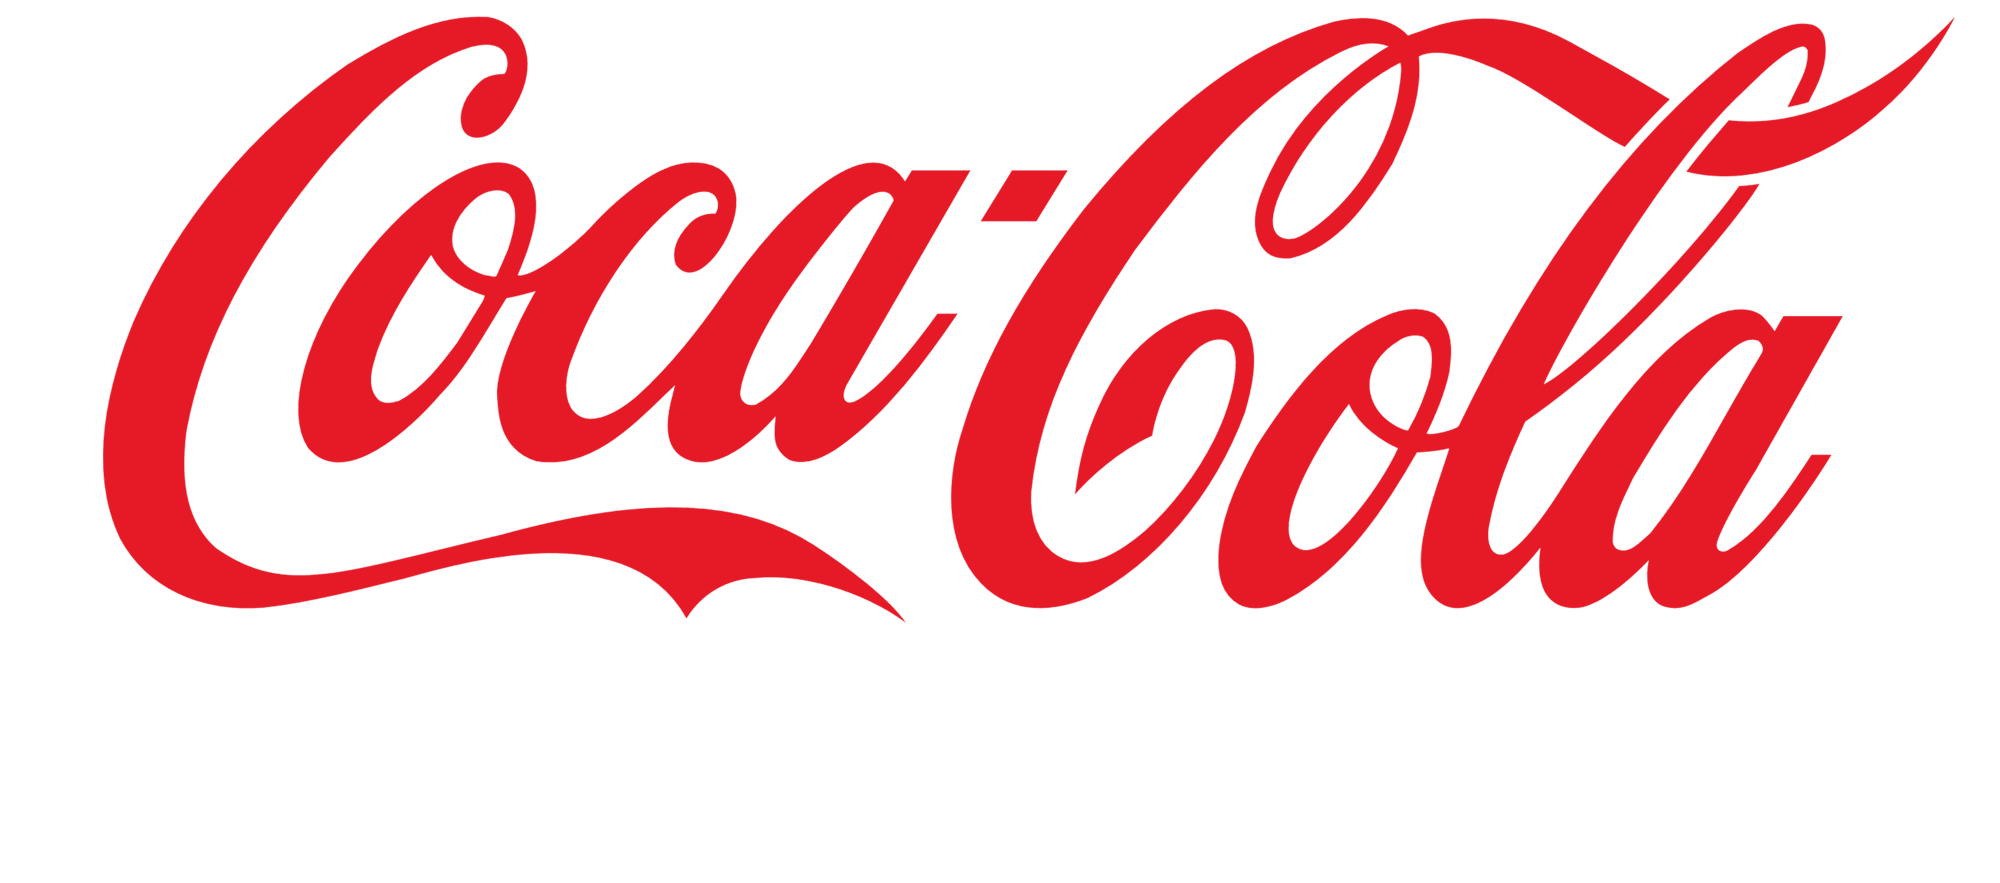 Coca-Cola-logo-4